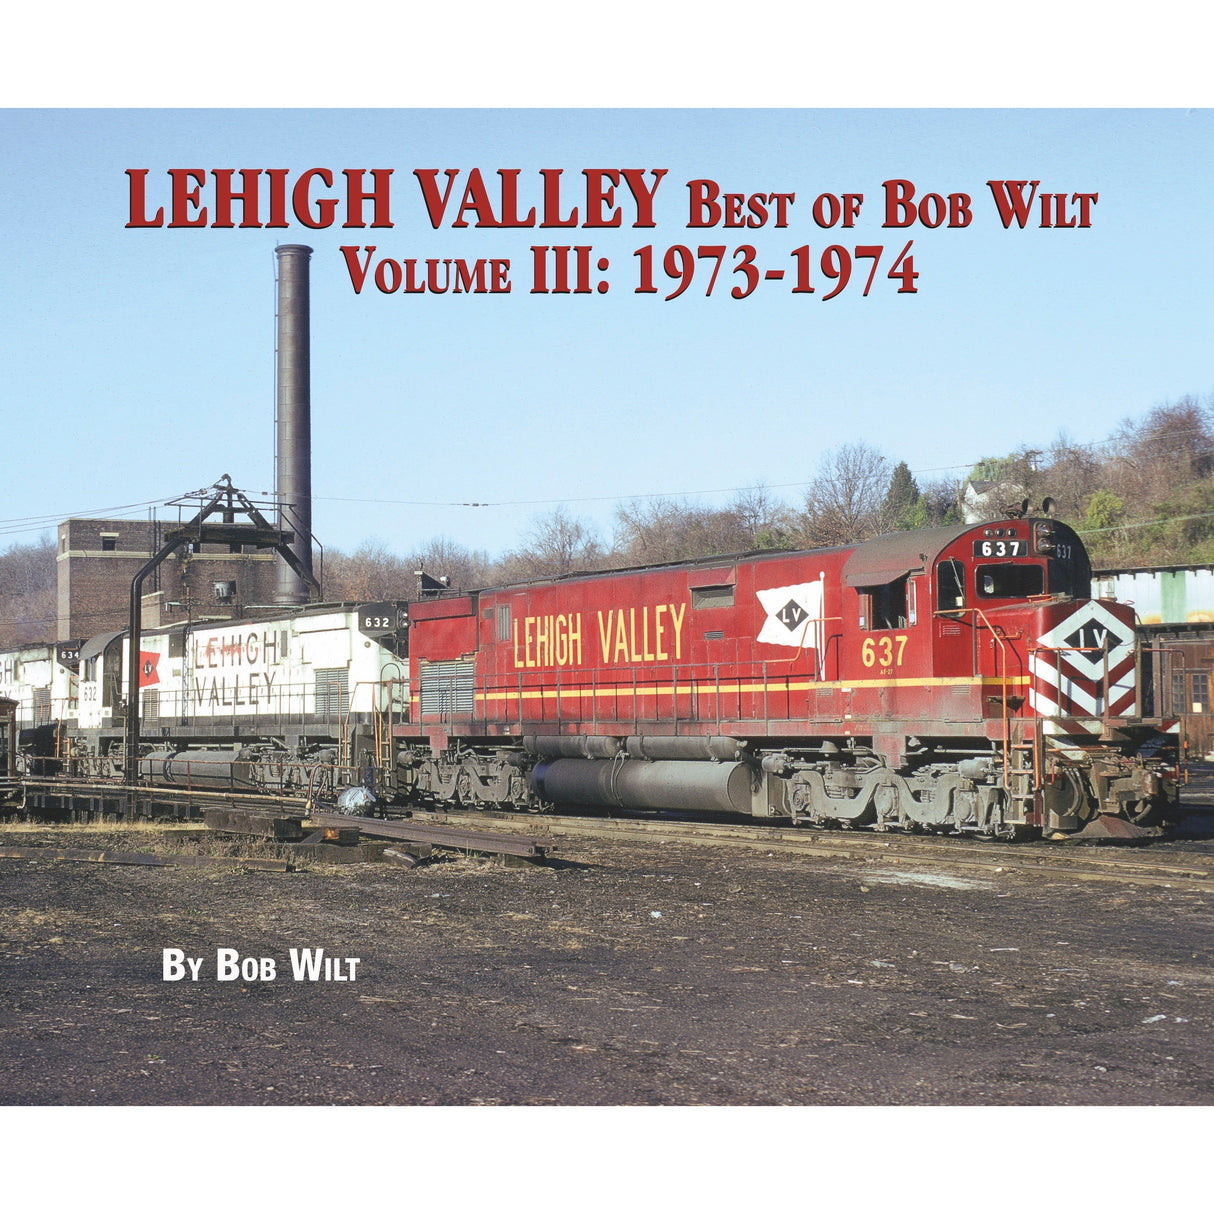 Morning Sun Books Lehigh Valley Best of Bob Wilt Volume III: 1973-1974 (Softcover)